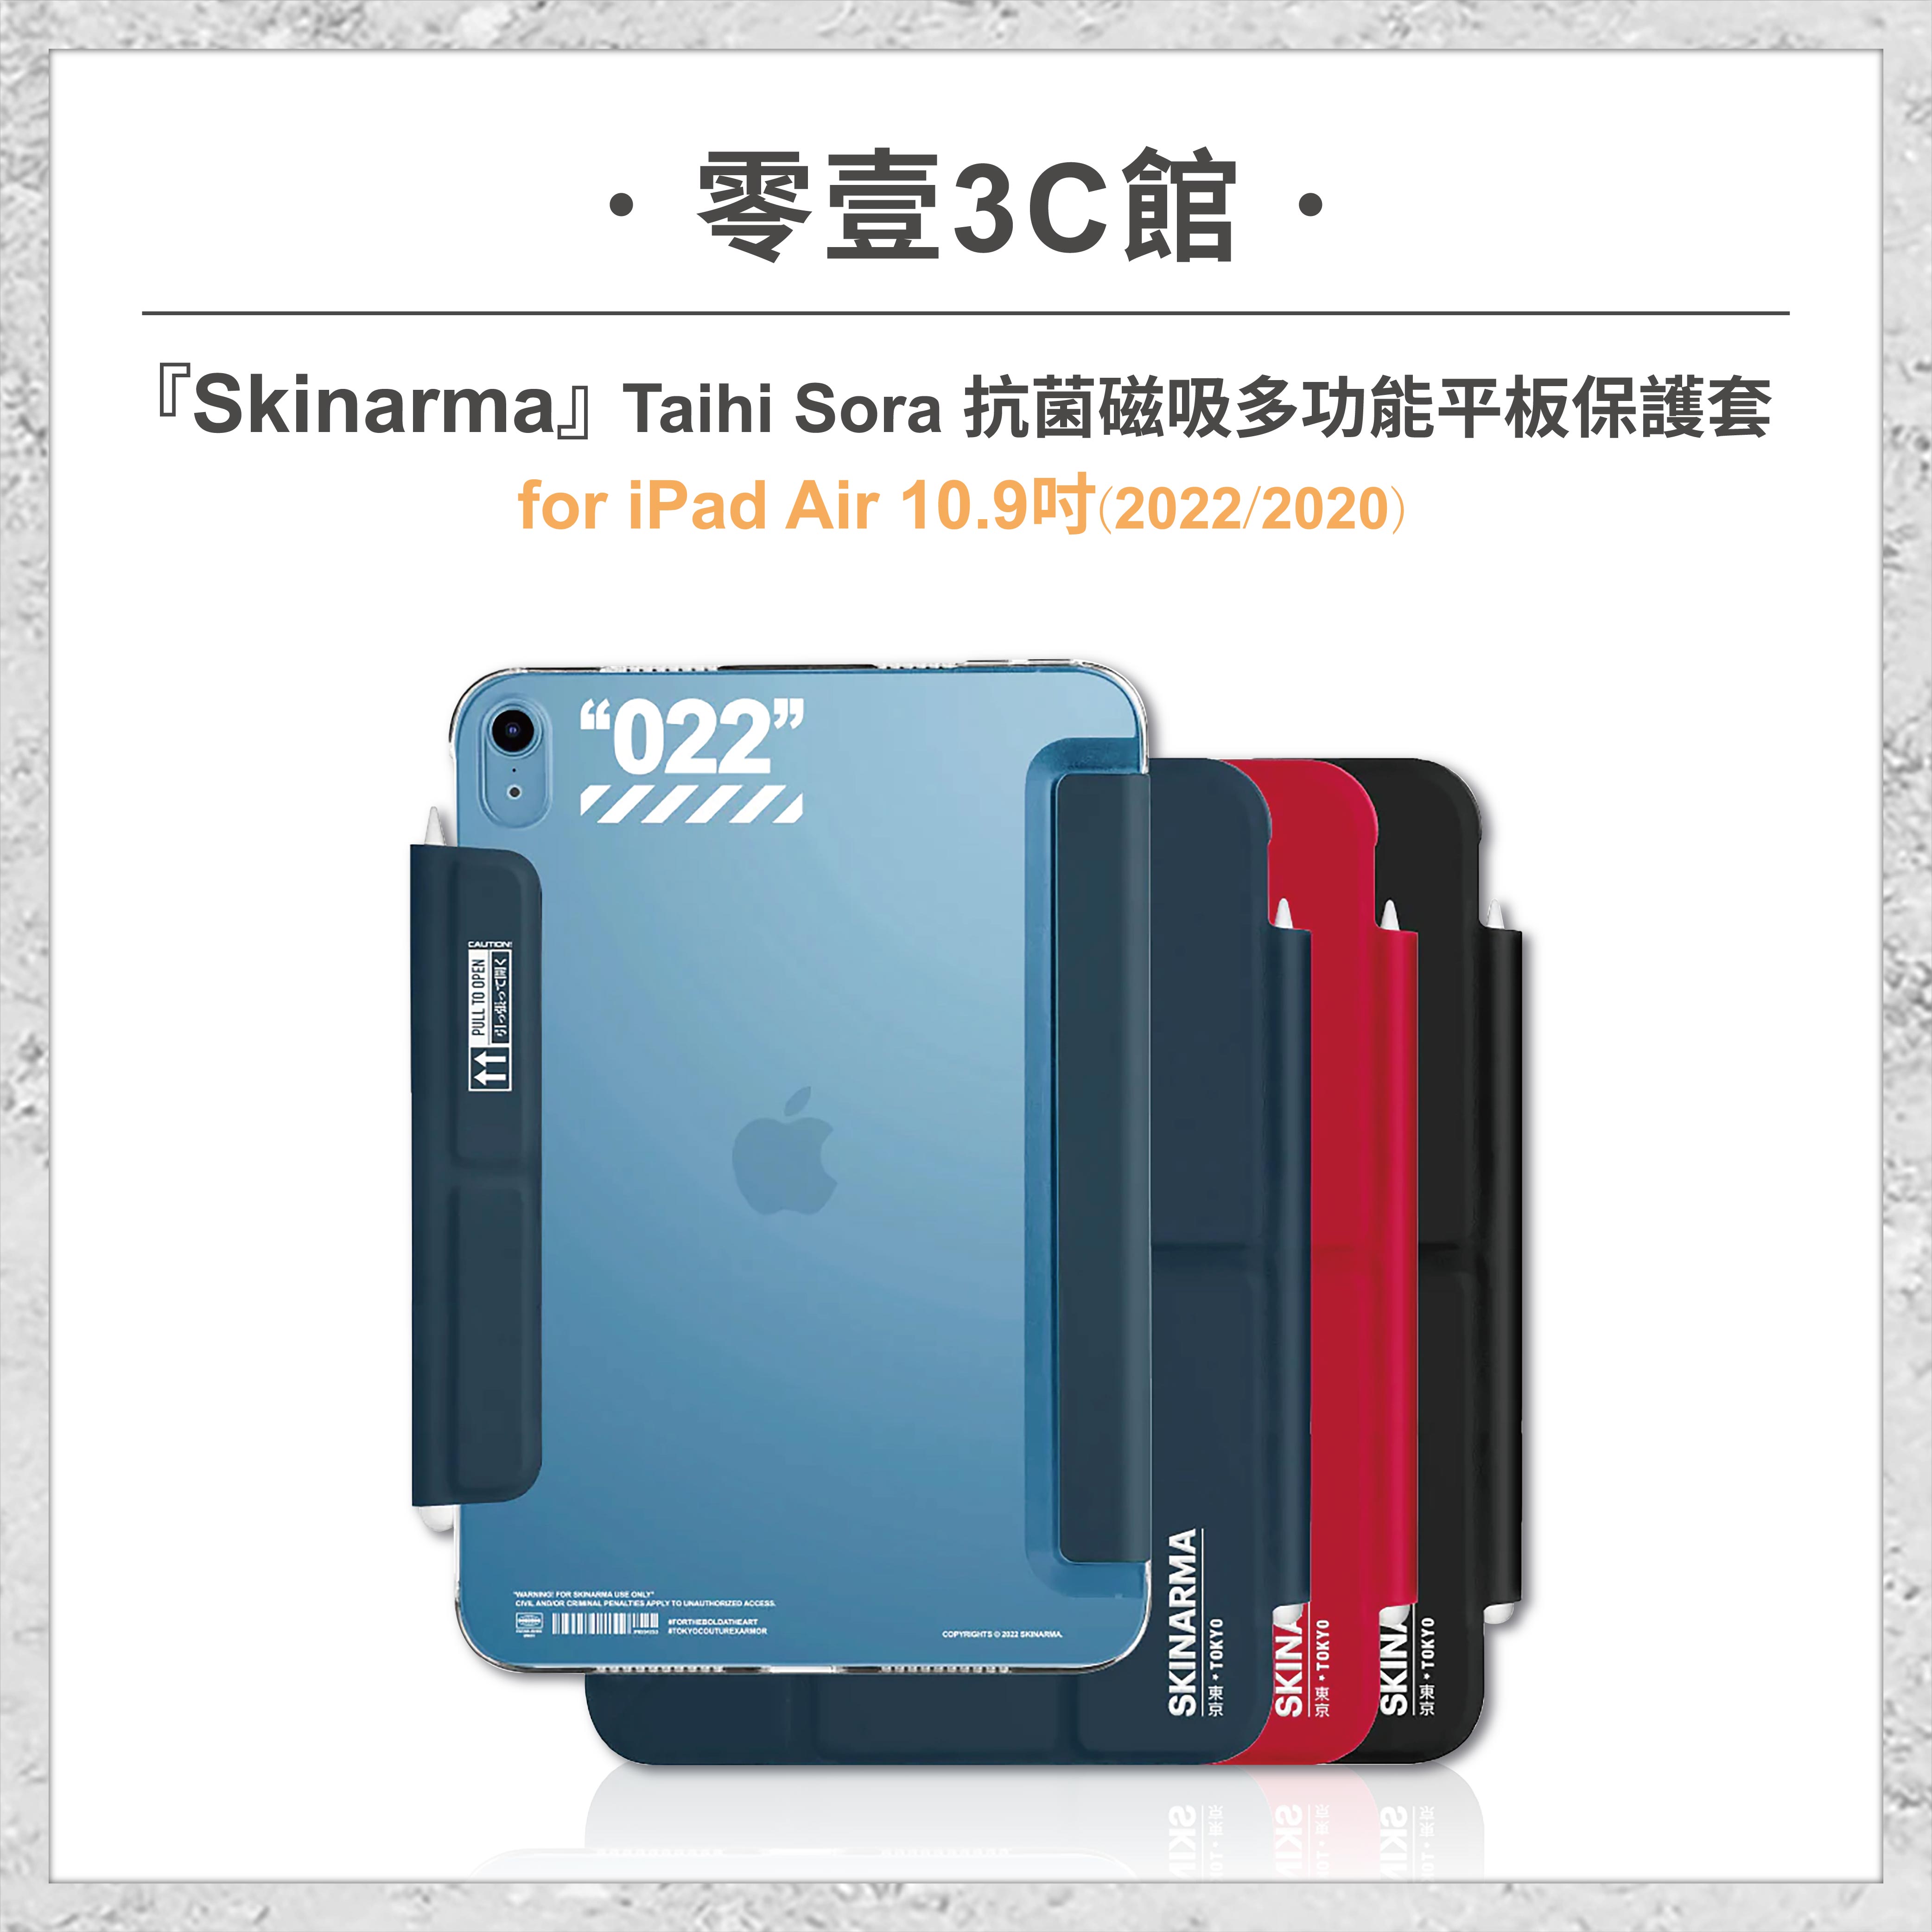 【Skinarma】Taihi Sora 抗菌磁吸多功能平板保護套 for iPad Air 10.9吋(2022/2020) 平板保護套 保護殼